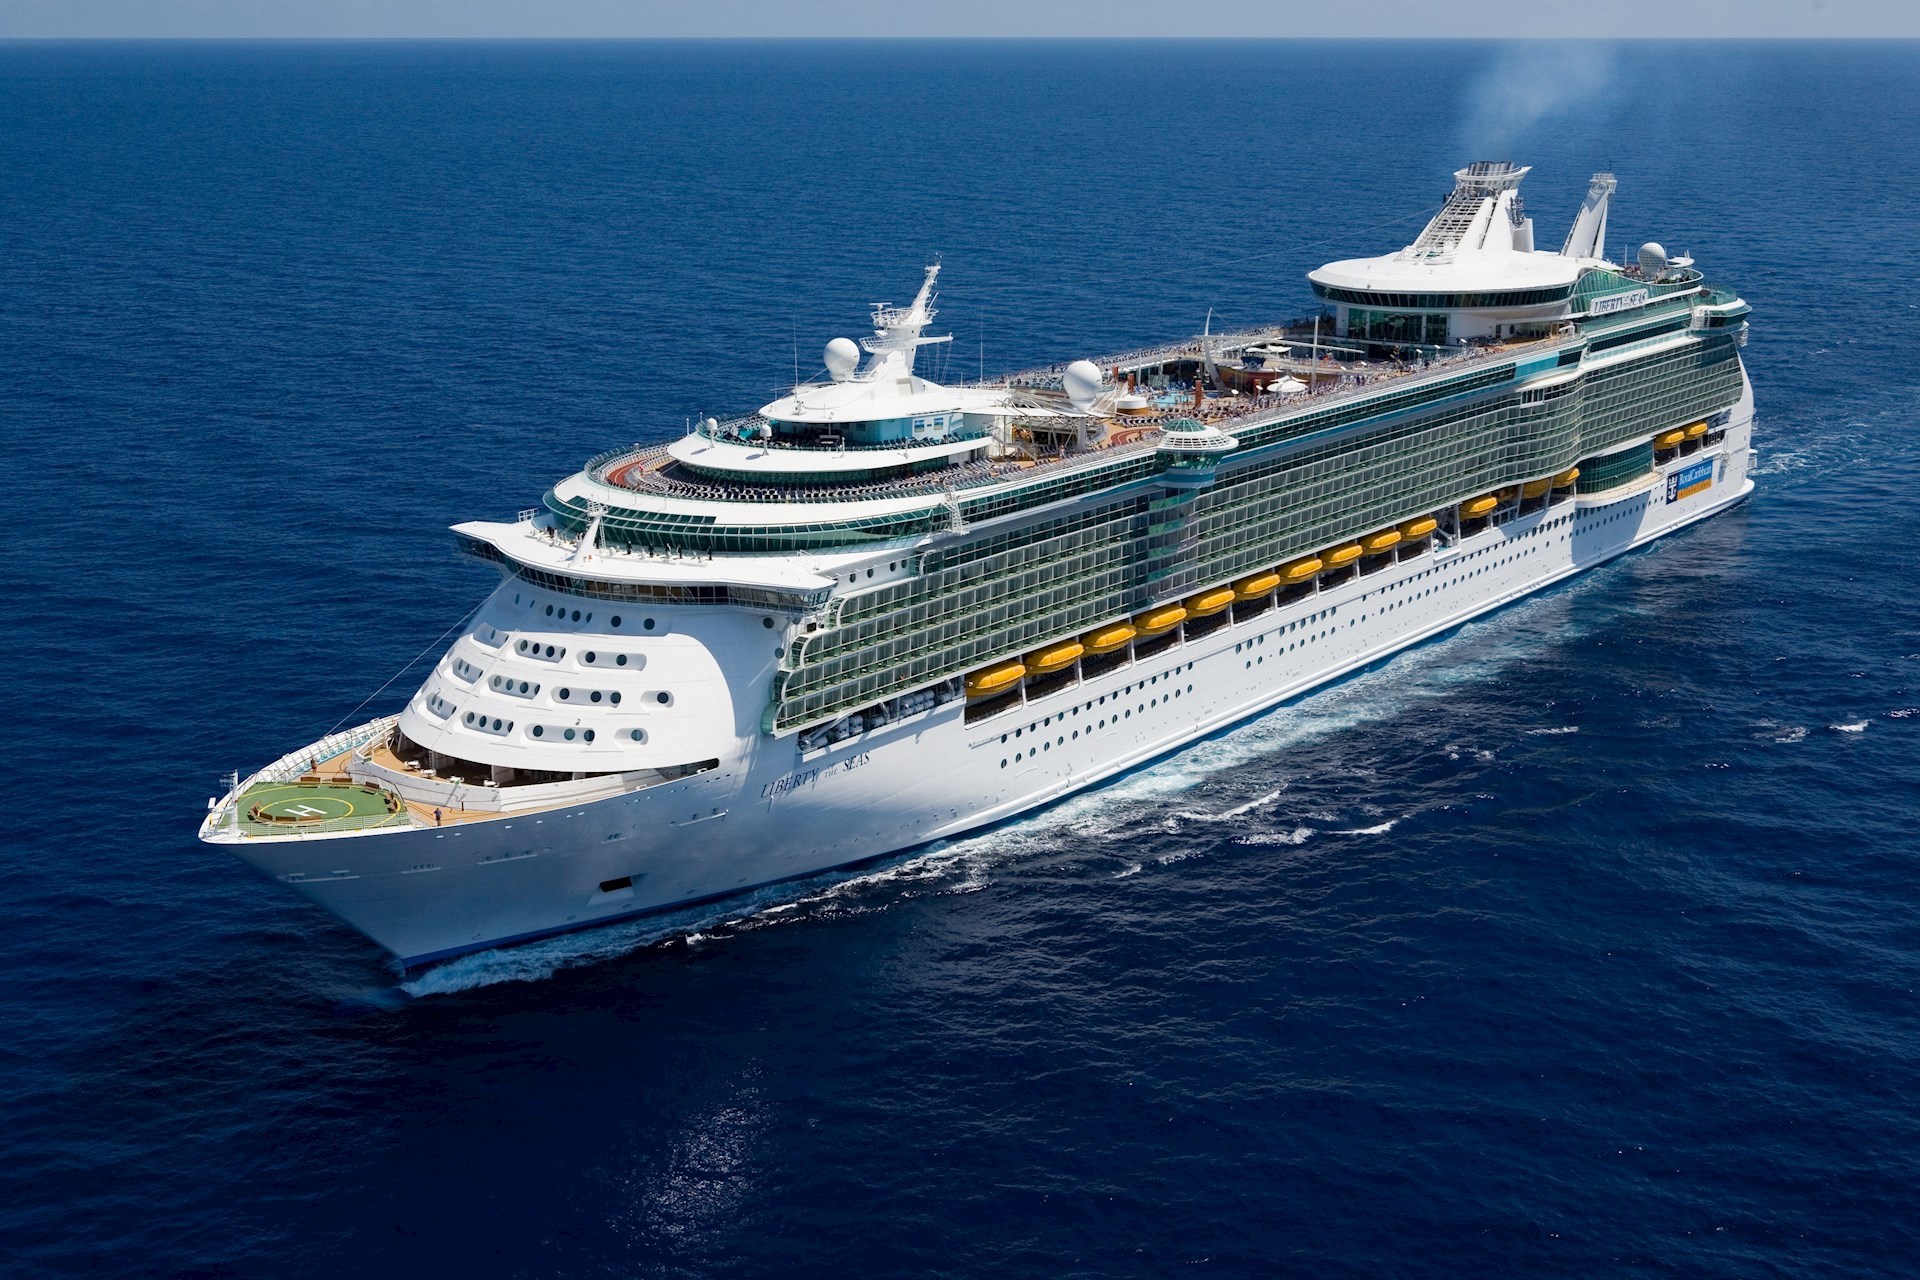 Royal Caribbean Liberty of the Seas Cruise Ship 2022 / 2023